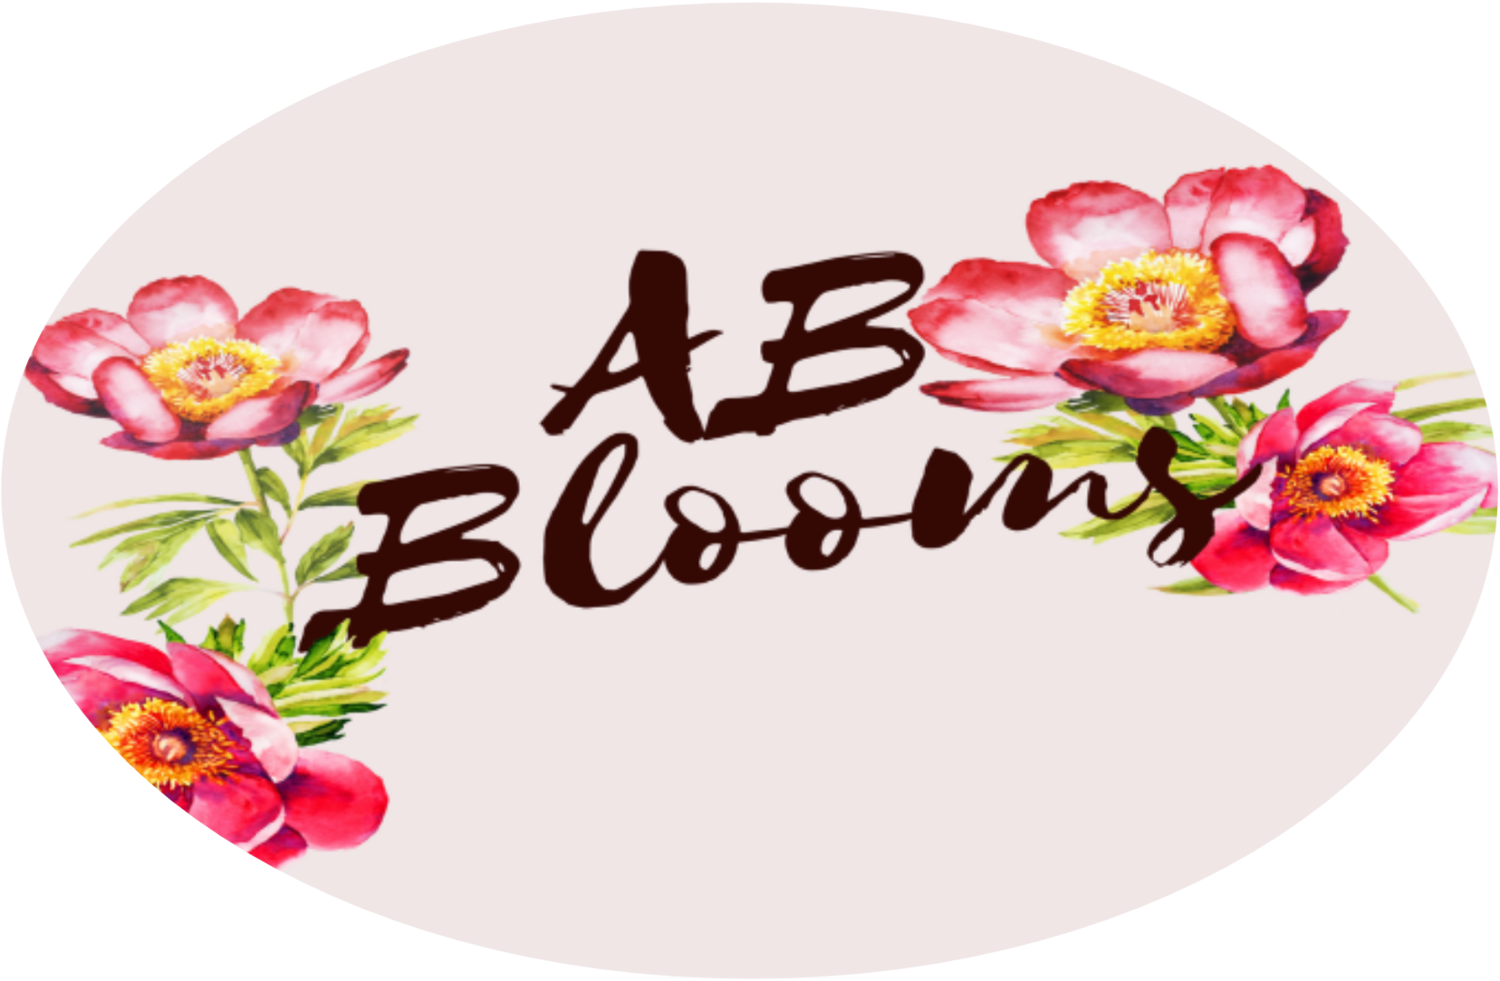 AB BLOOMS | FRESH FLORAL DESIGN